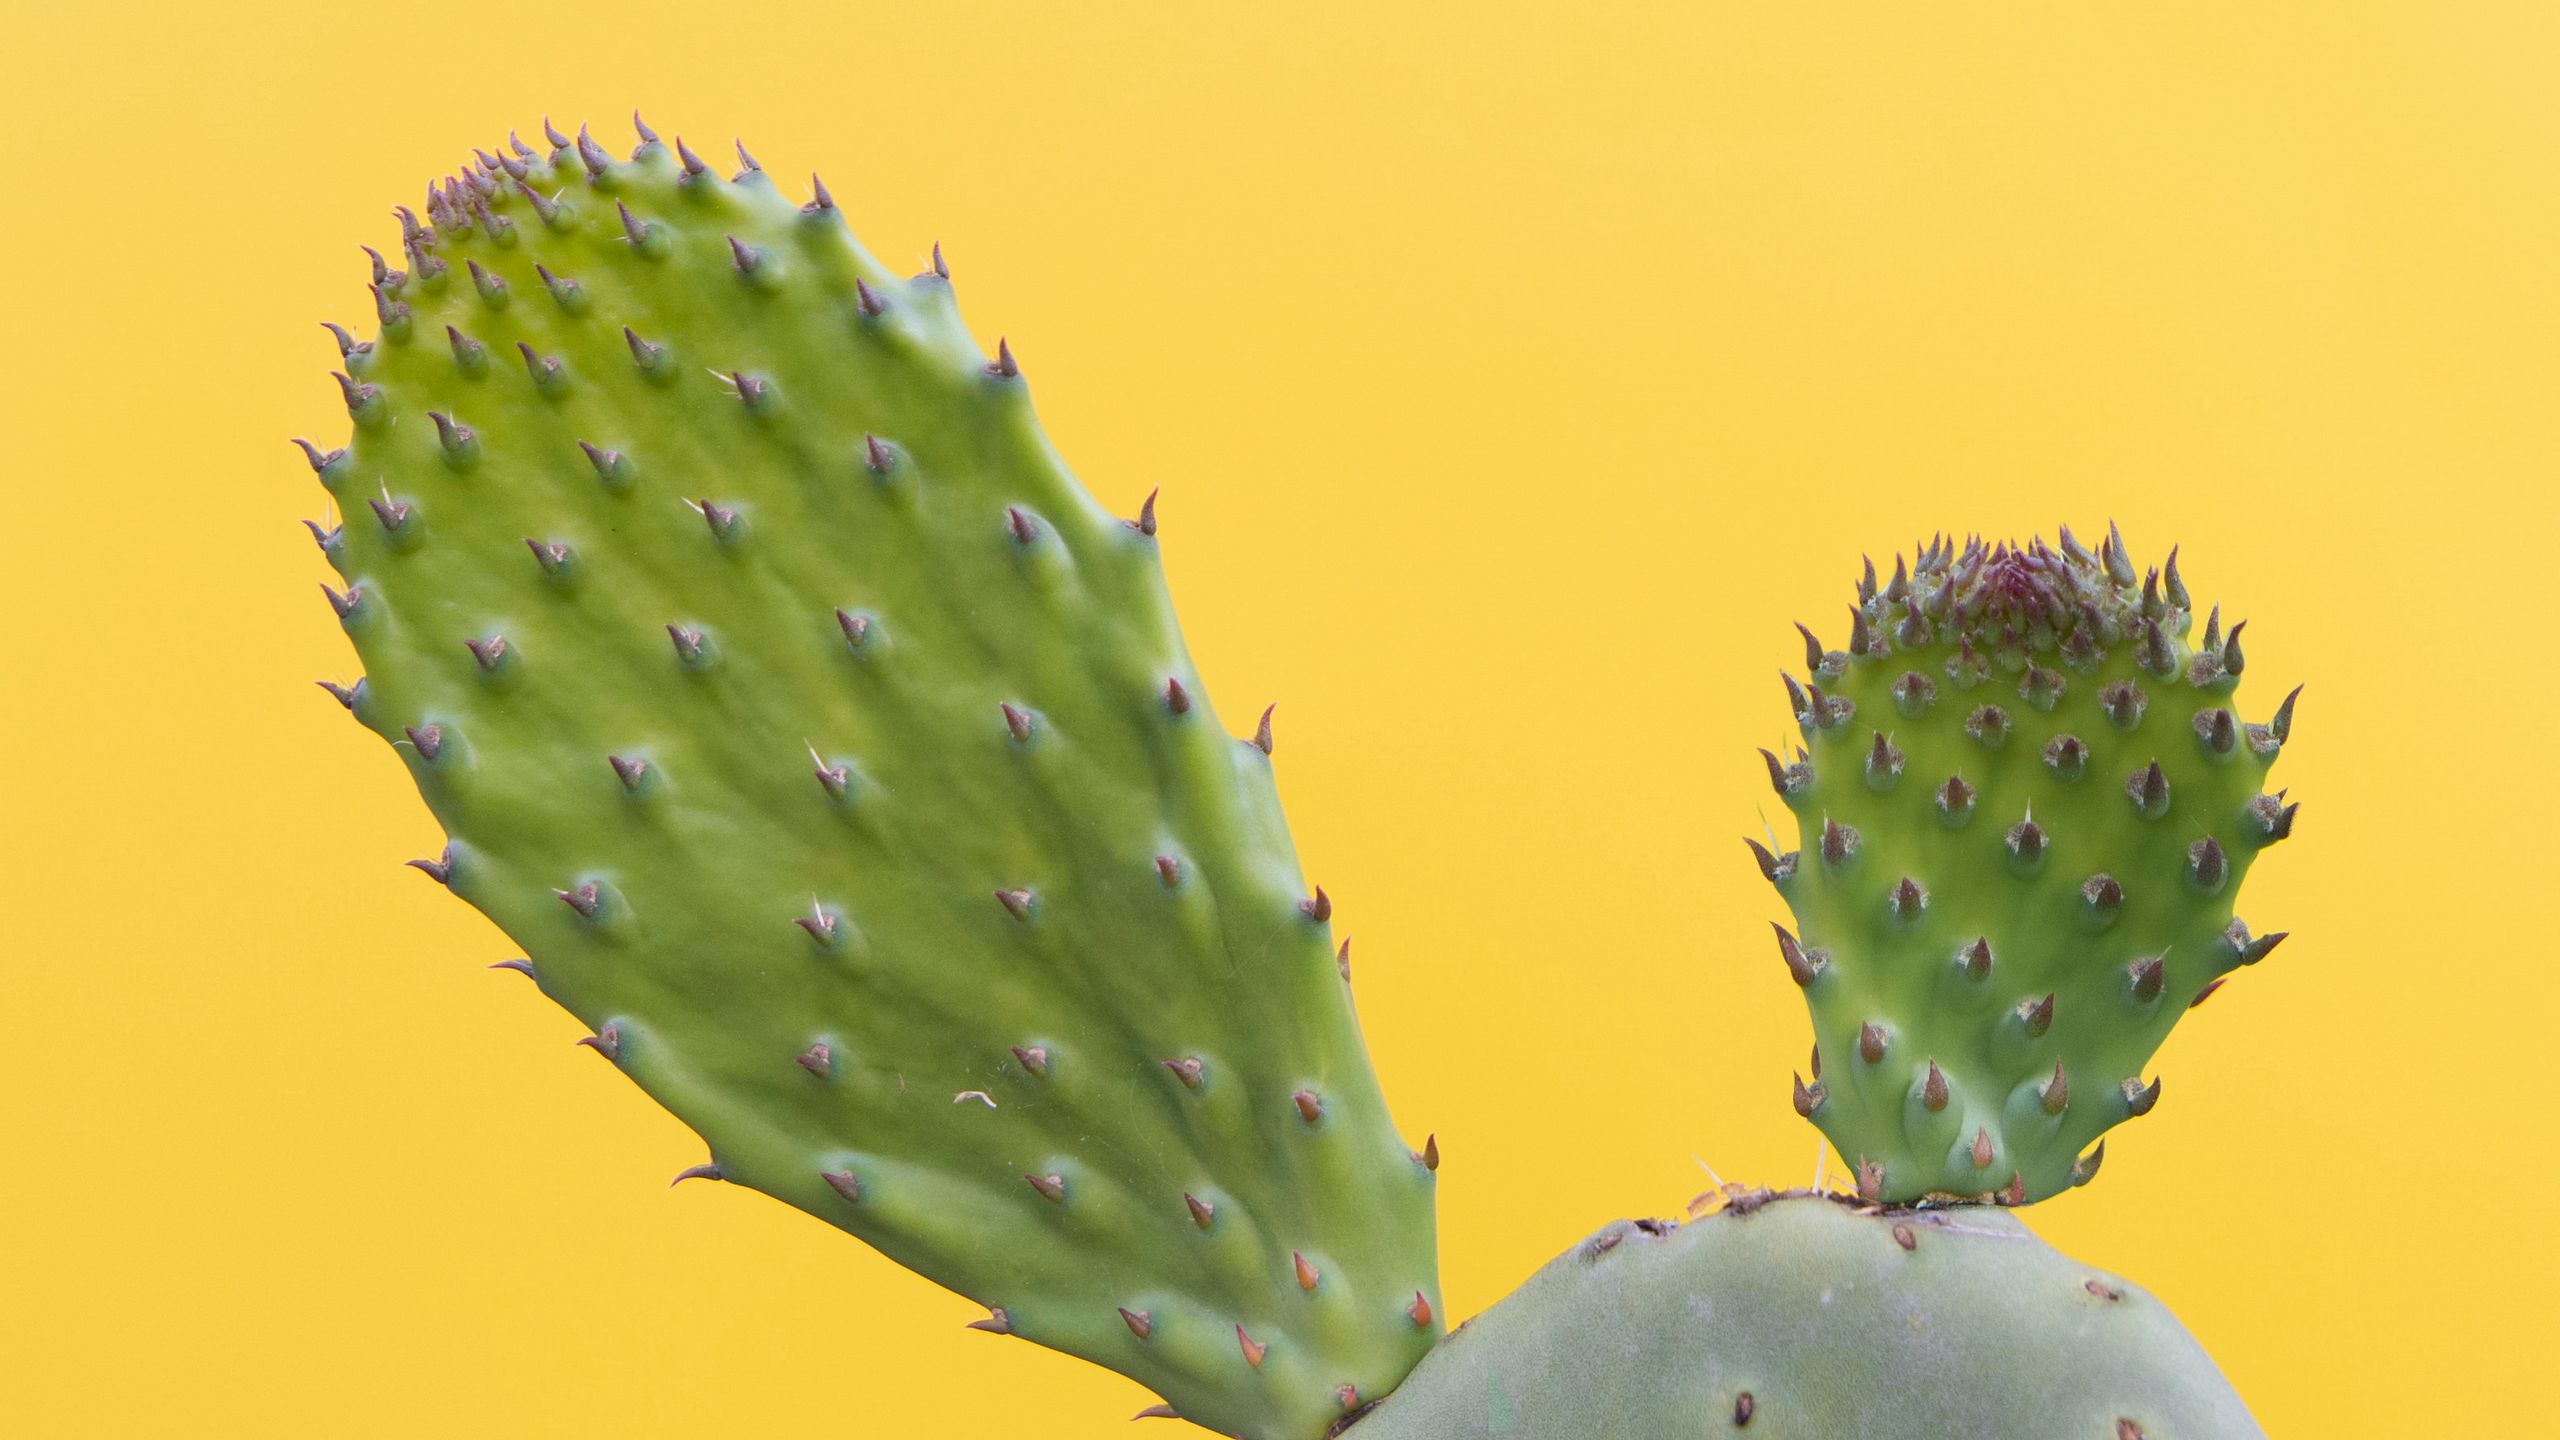 2560x1440 Wallpaper cactus, succulent, prickly, green, minimalism